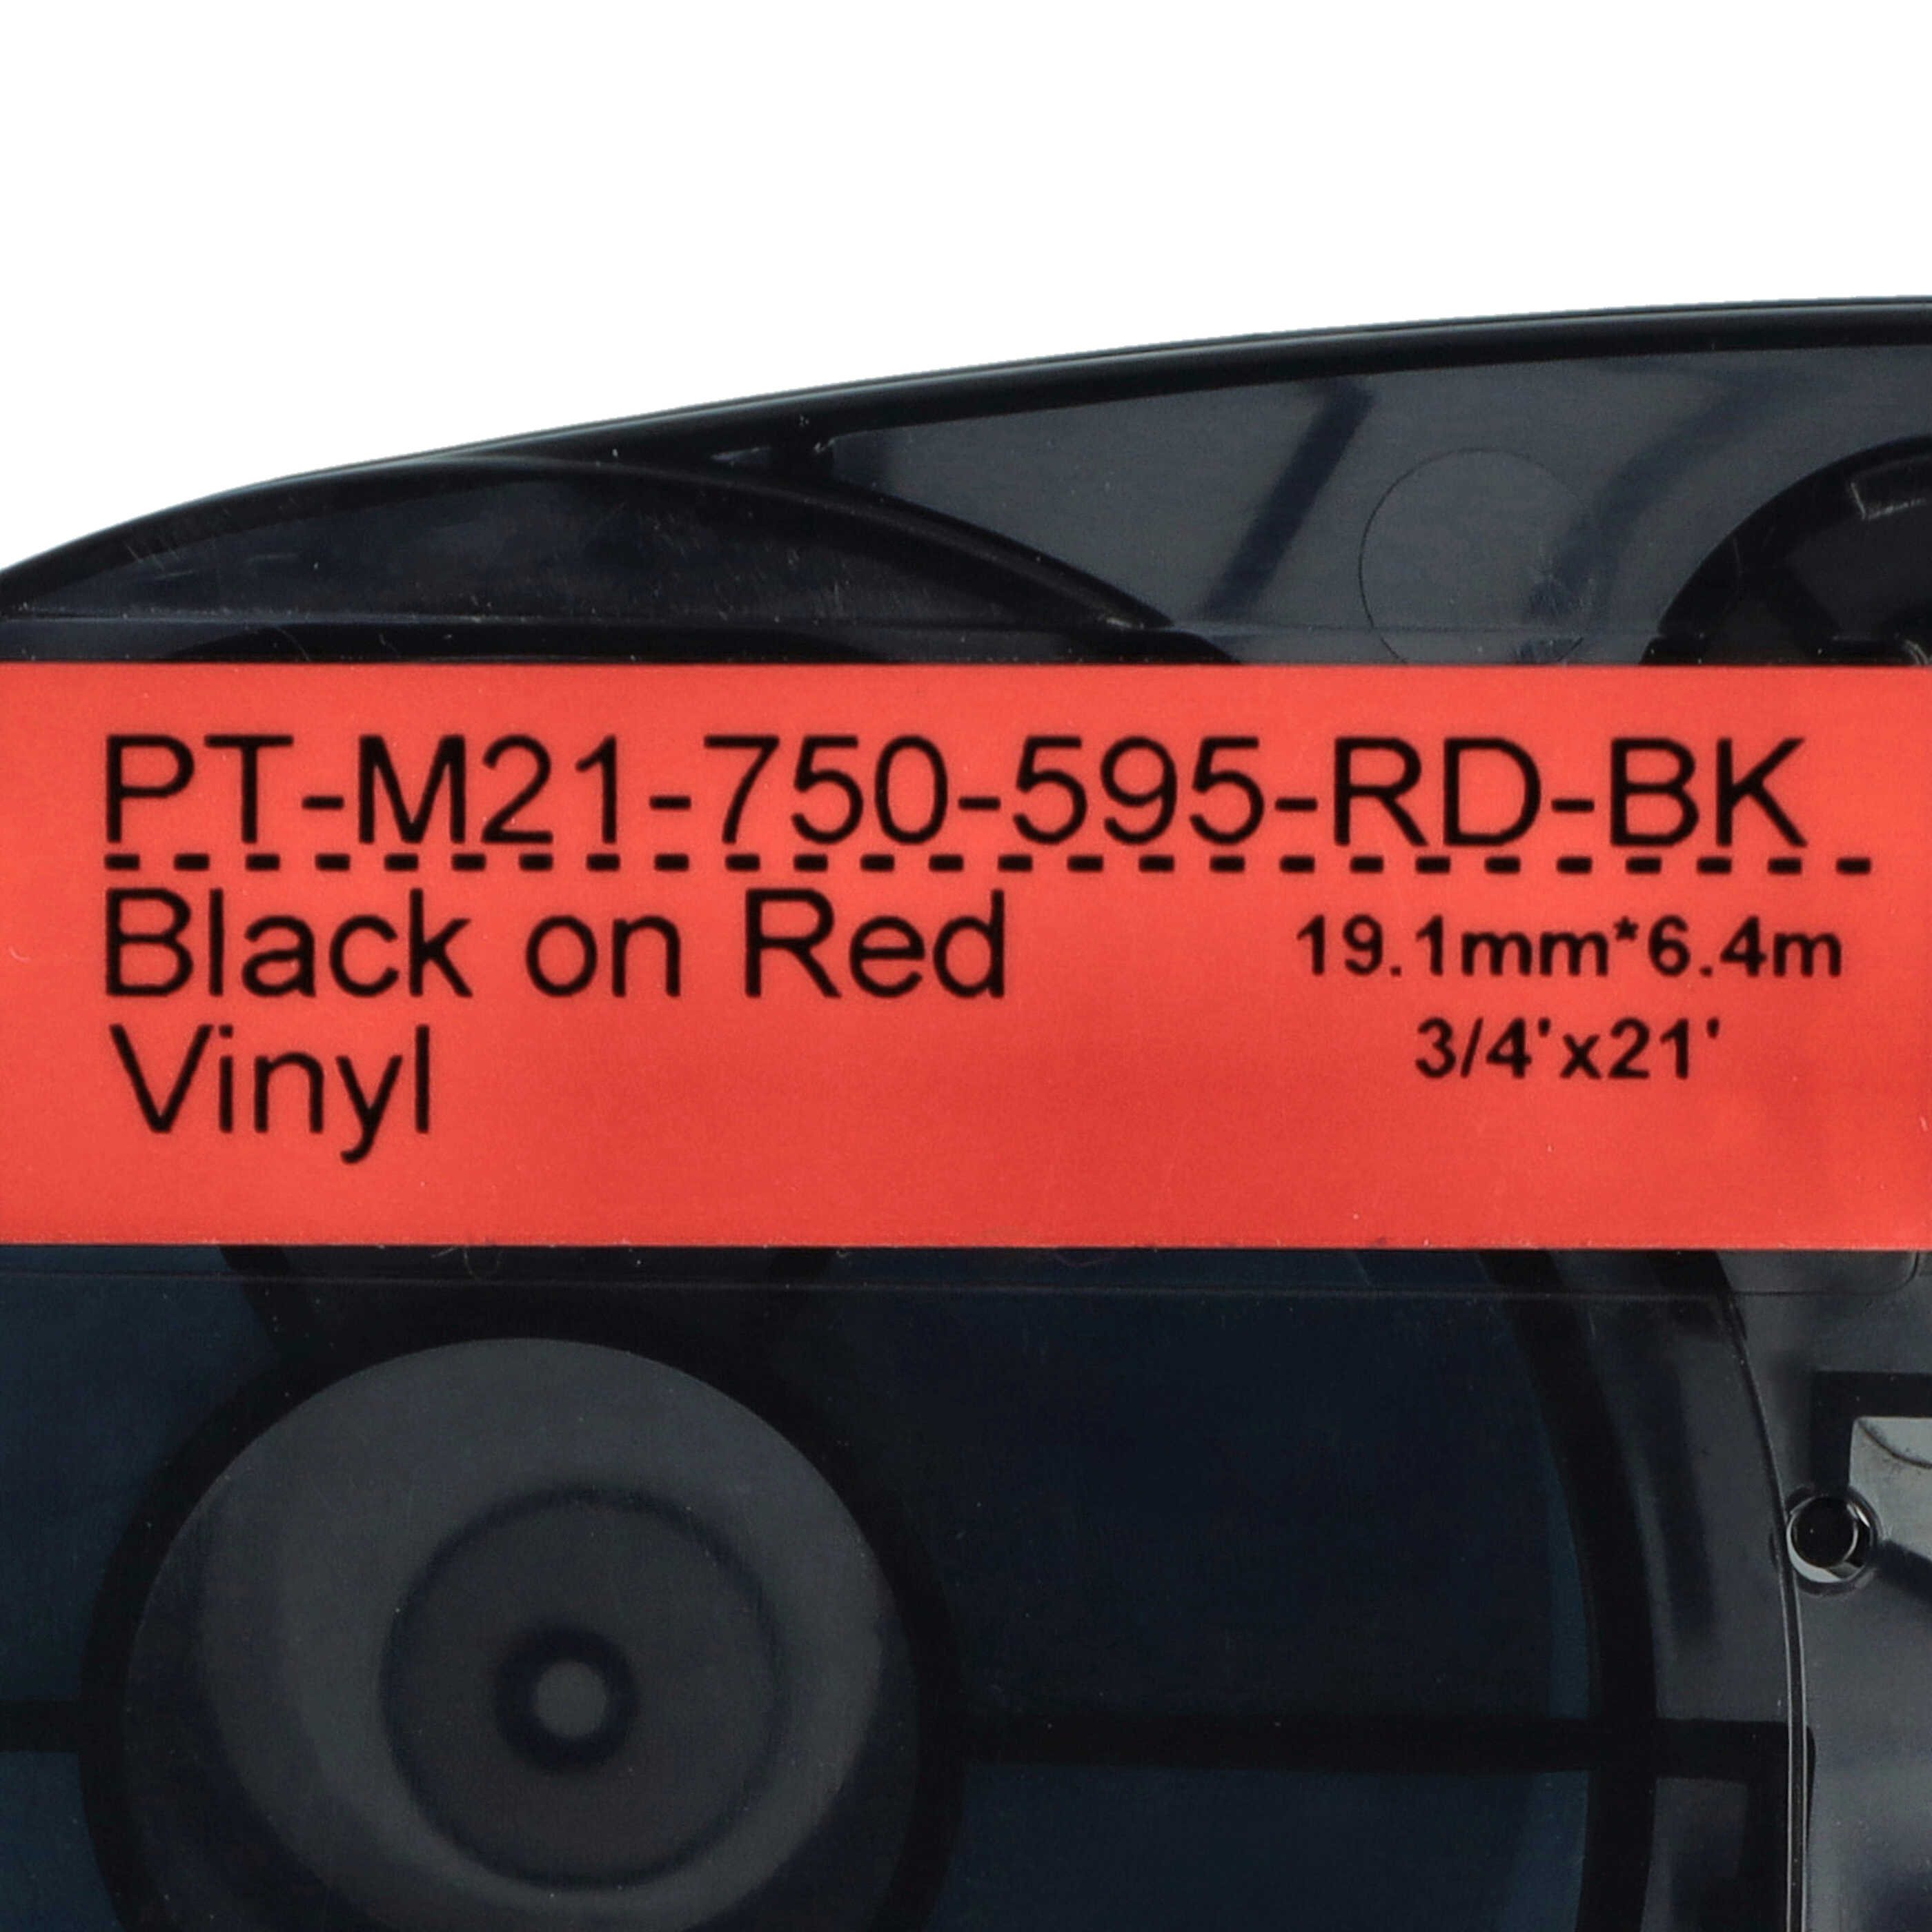 Casete cinta escritura reemplaza Brady M21-750-595-RD-BK, M21-750-595-RD Negro su Rojo